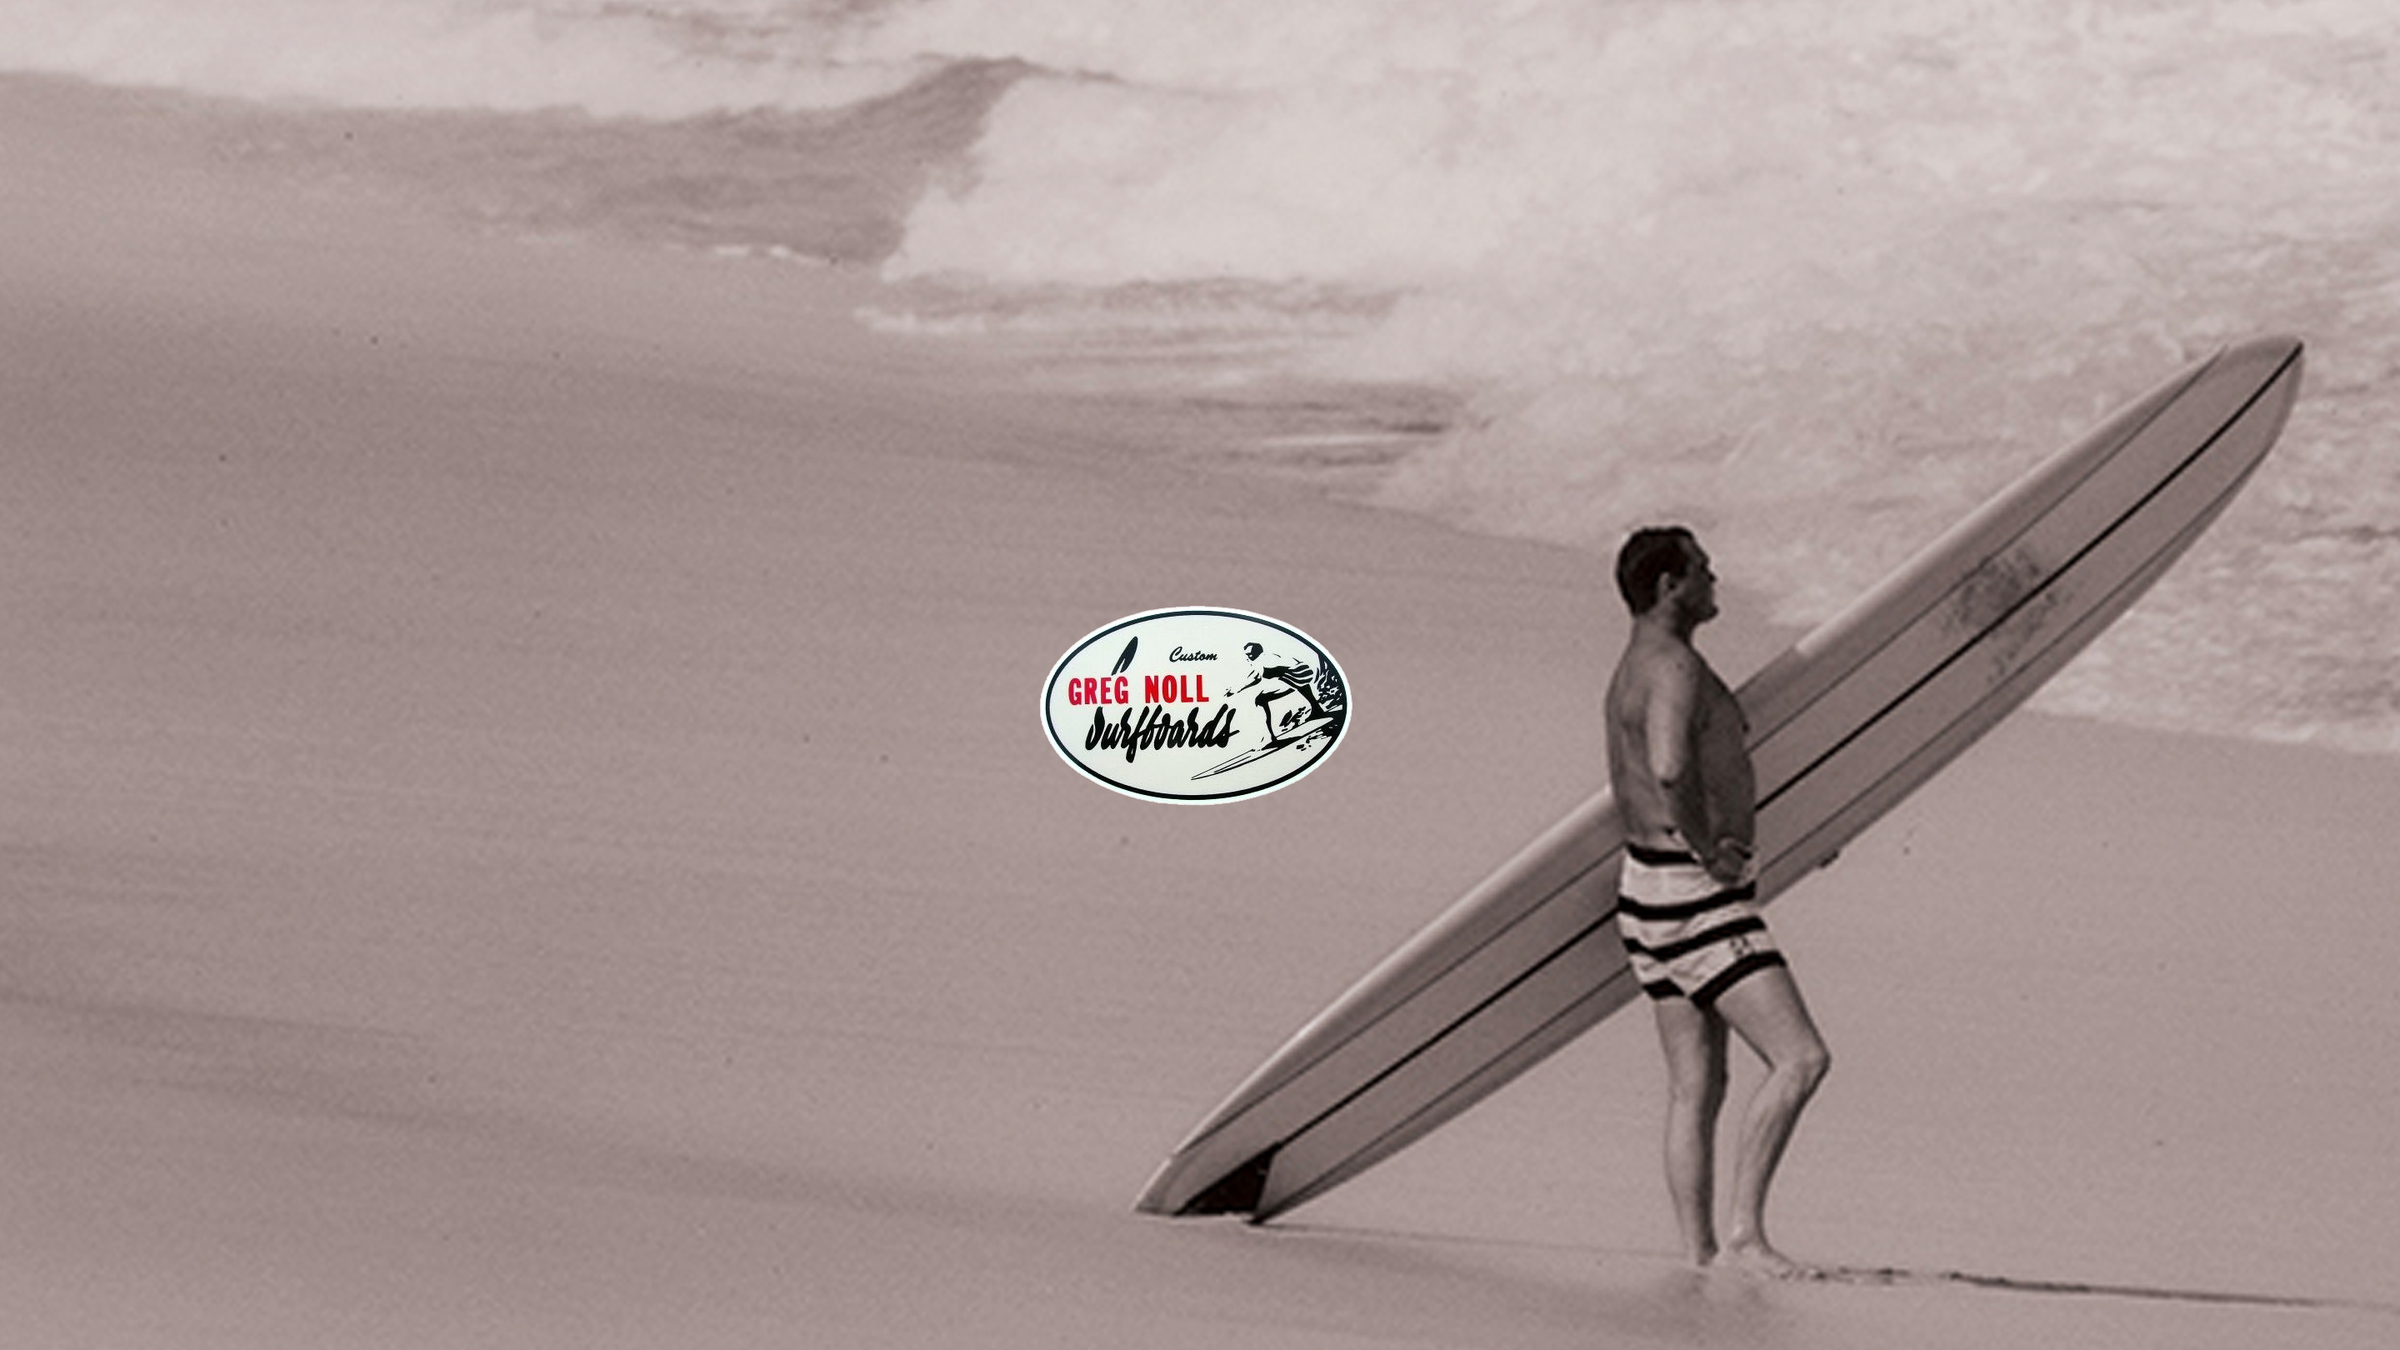 Greg Noll Surfboards